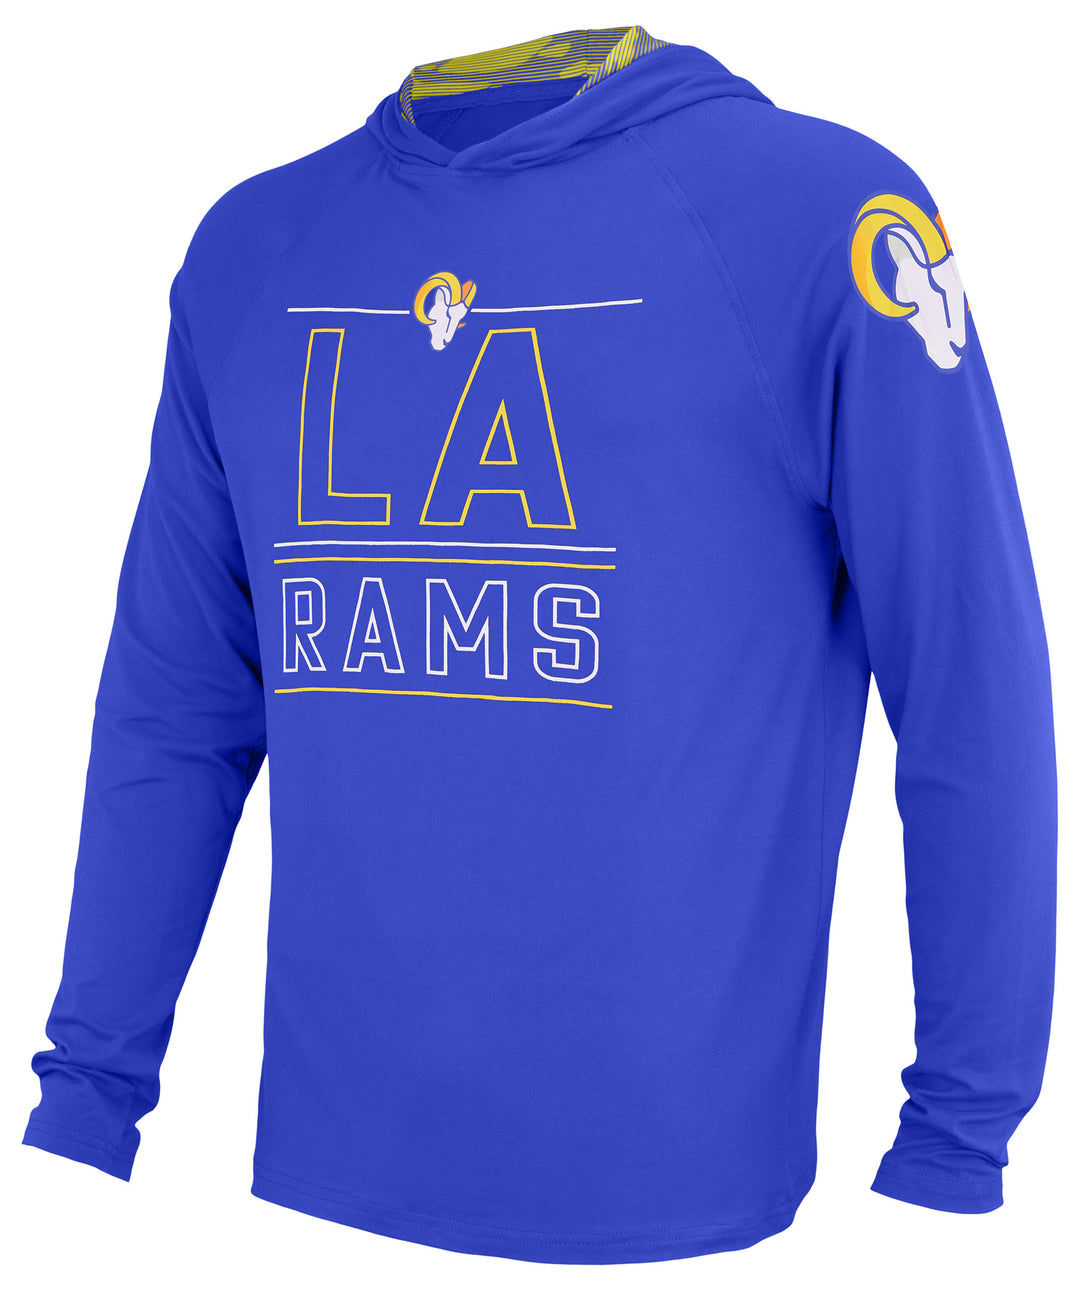 Zubaz NFL Men's Los Angeles Rams Team Color Active Hoodie With Camo Accents